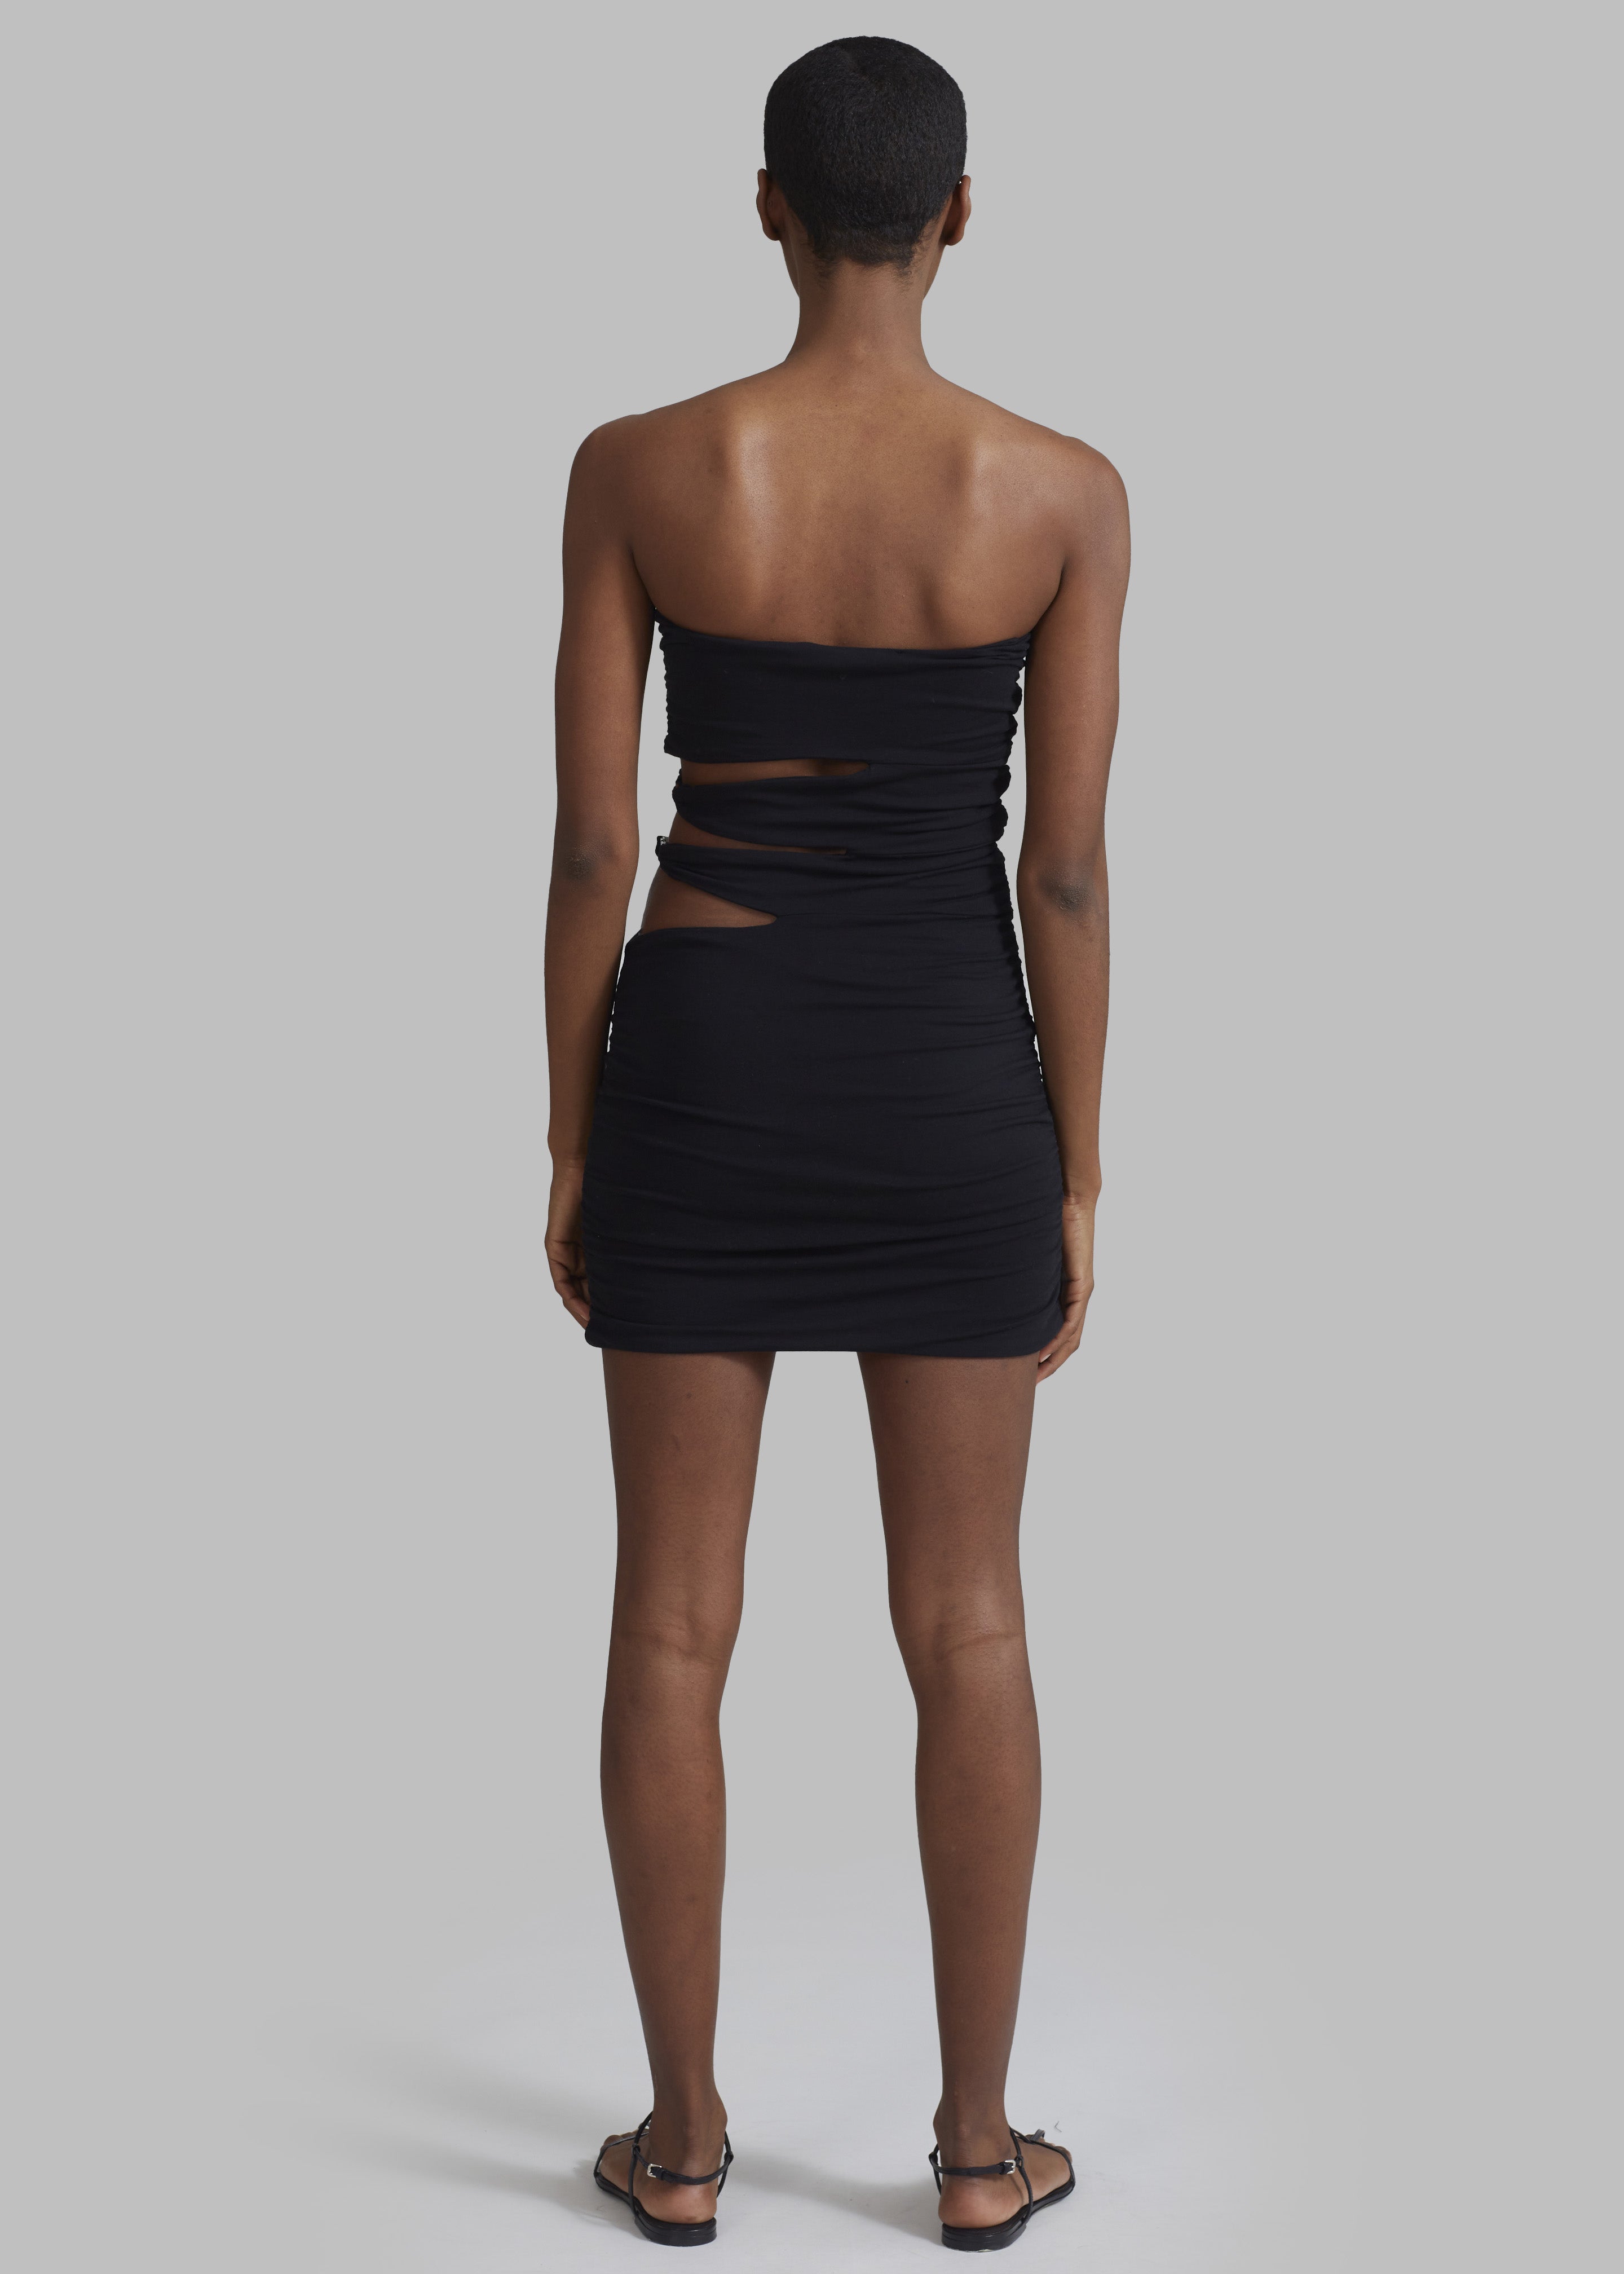 ROTATE Shane Jersey Mini Cut-Out Dress - Black - 7